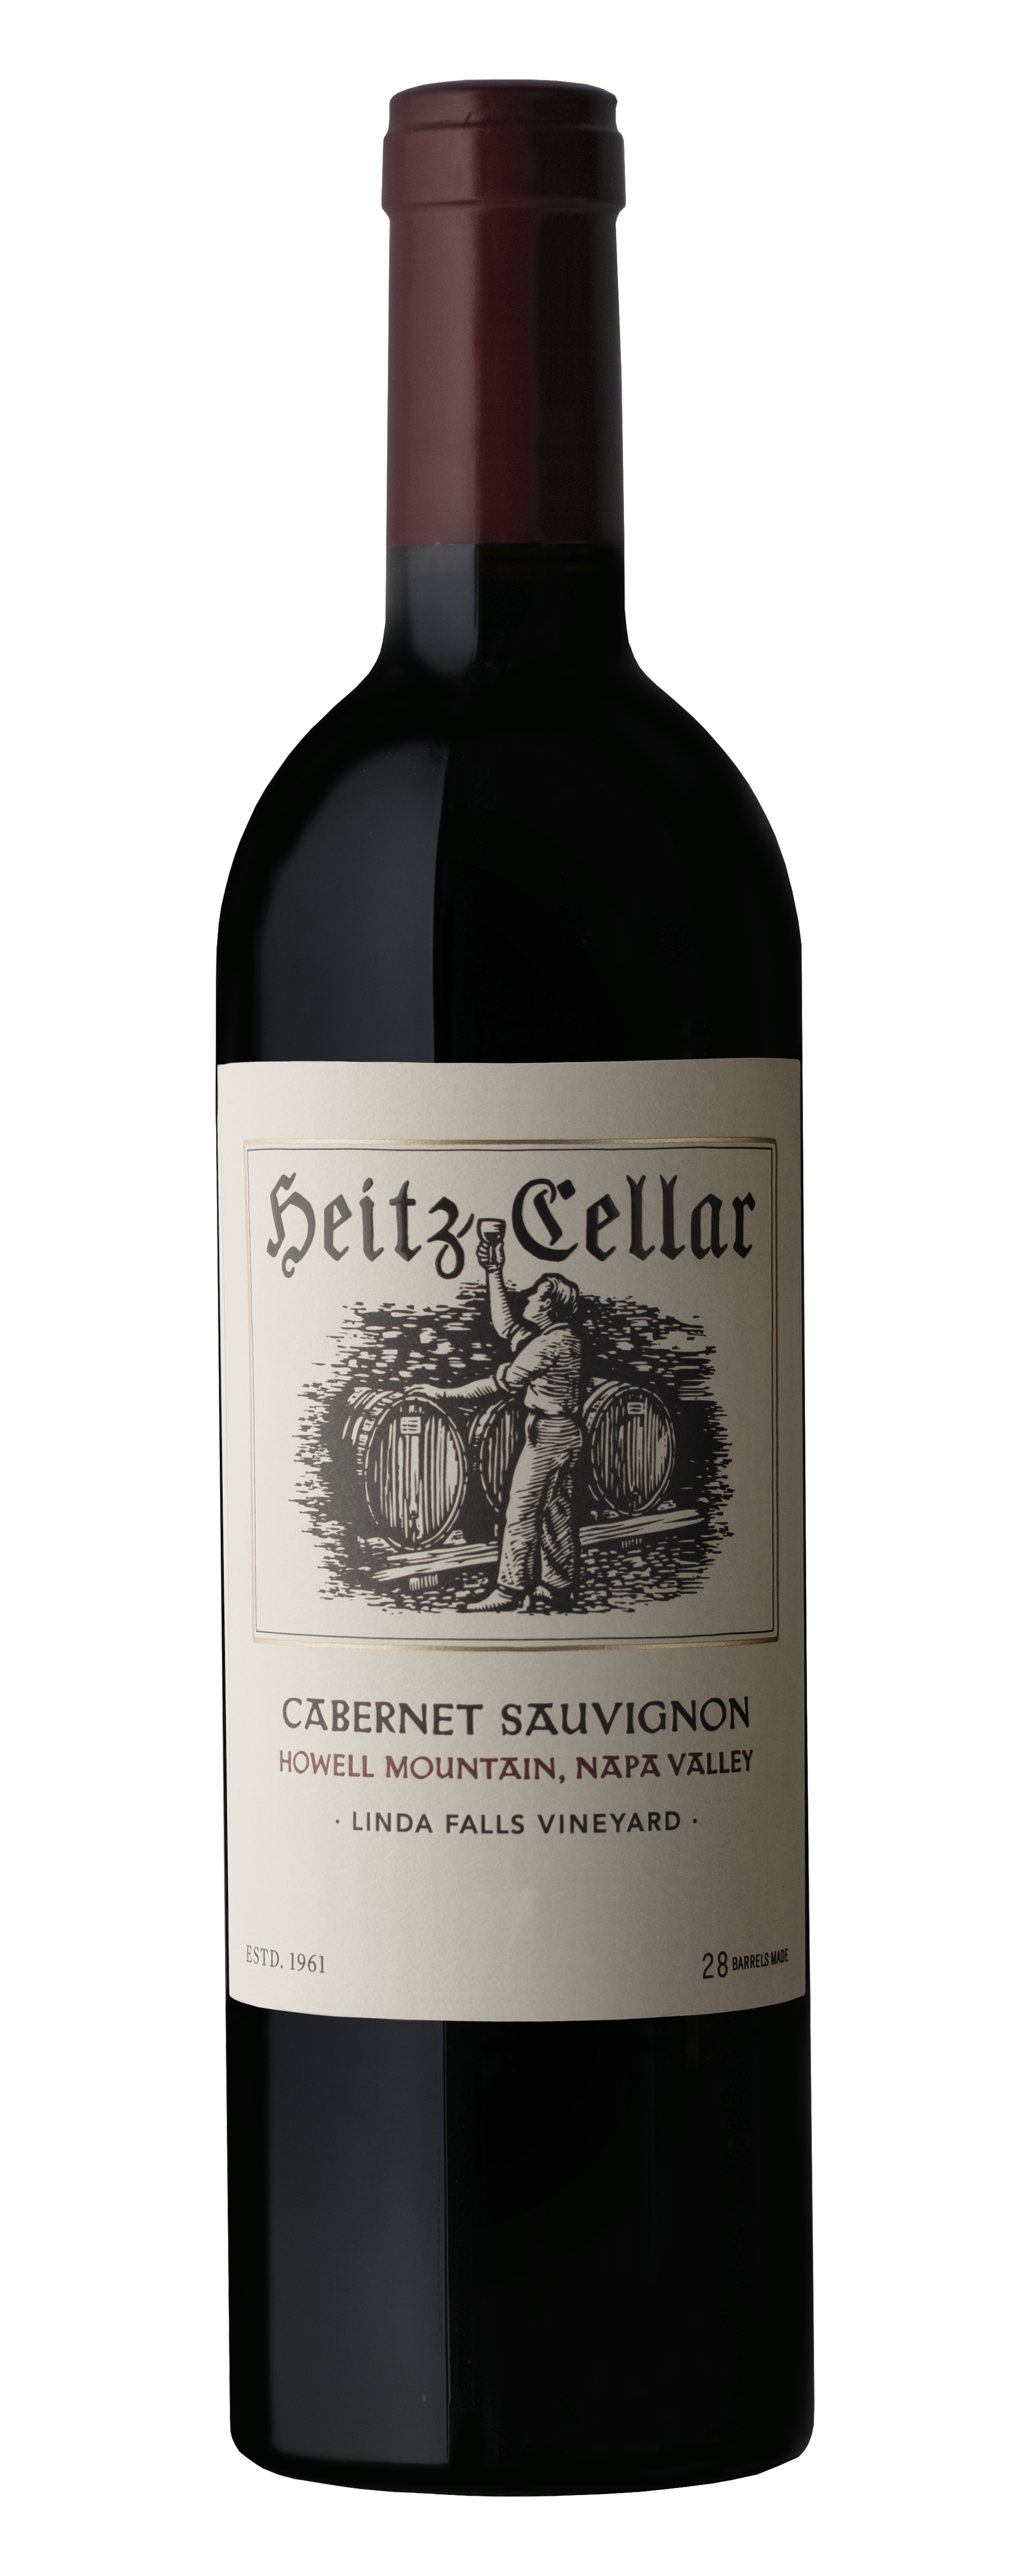 Bottle of Heitz Cellar Linda Falls Vineyard Howell Mountain Cabernet Sauvignon